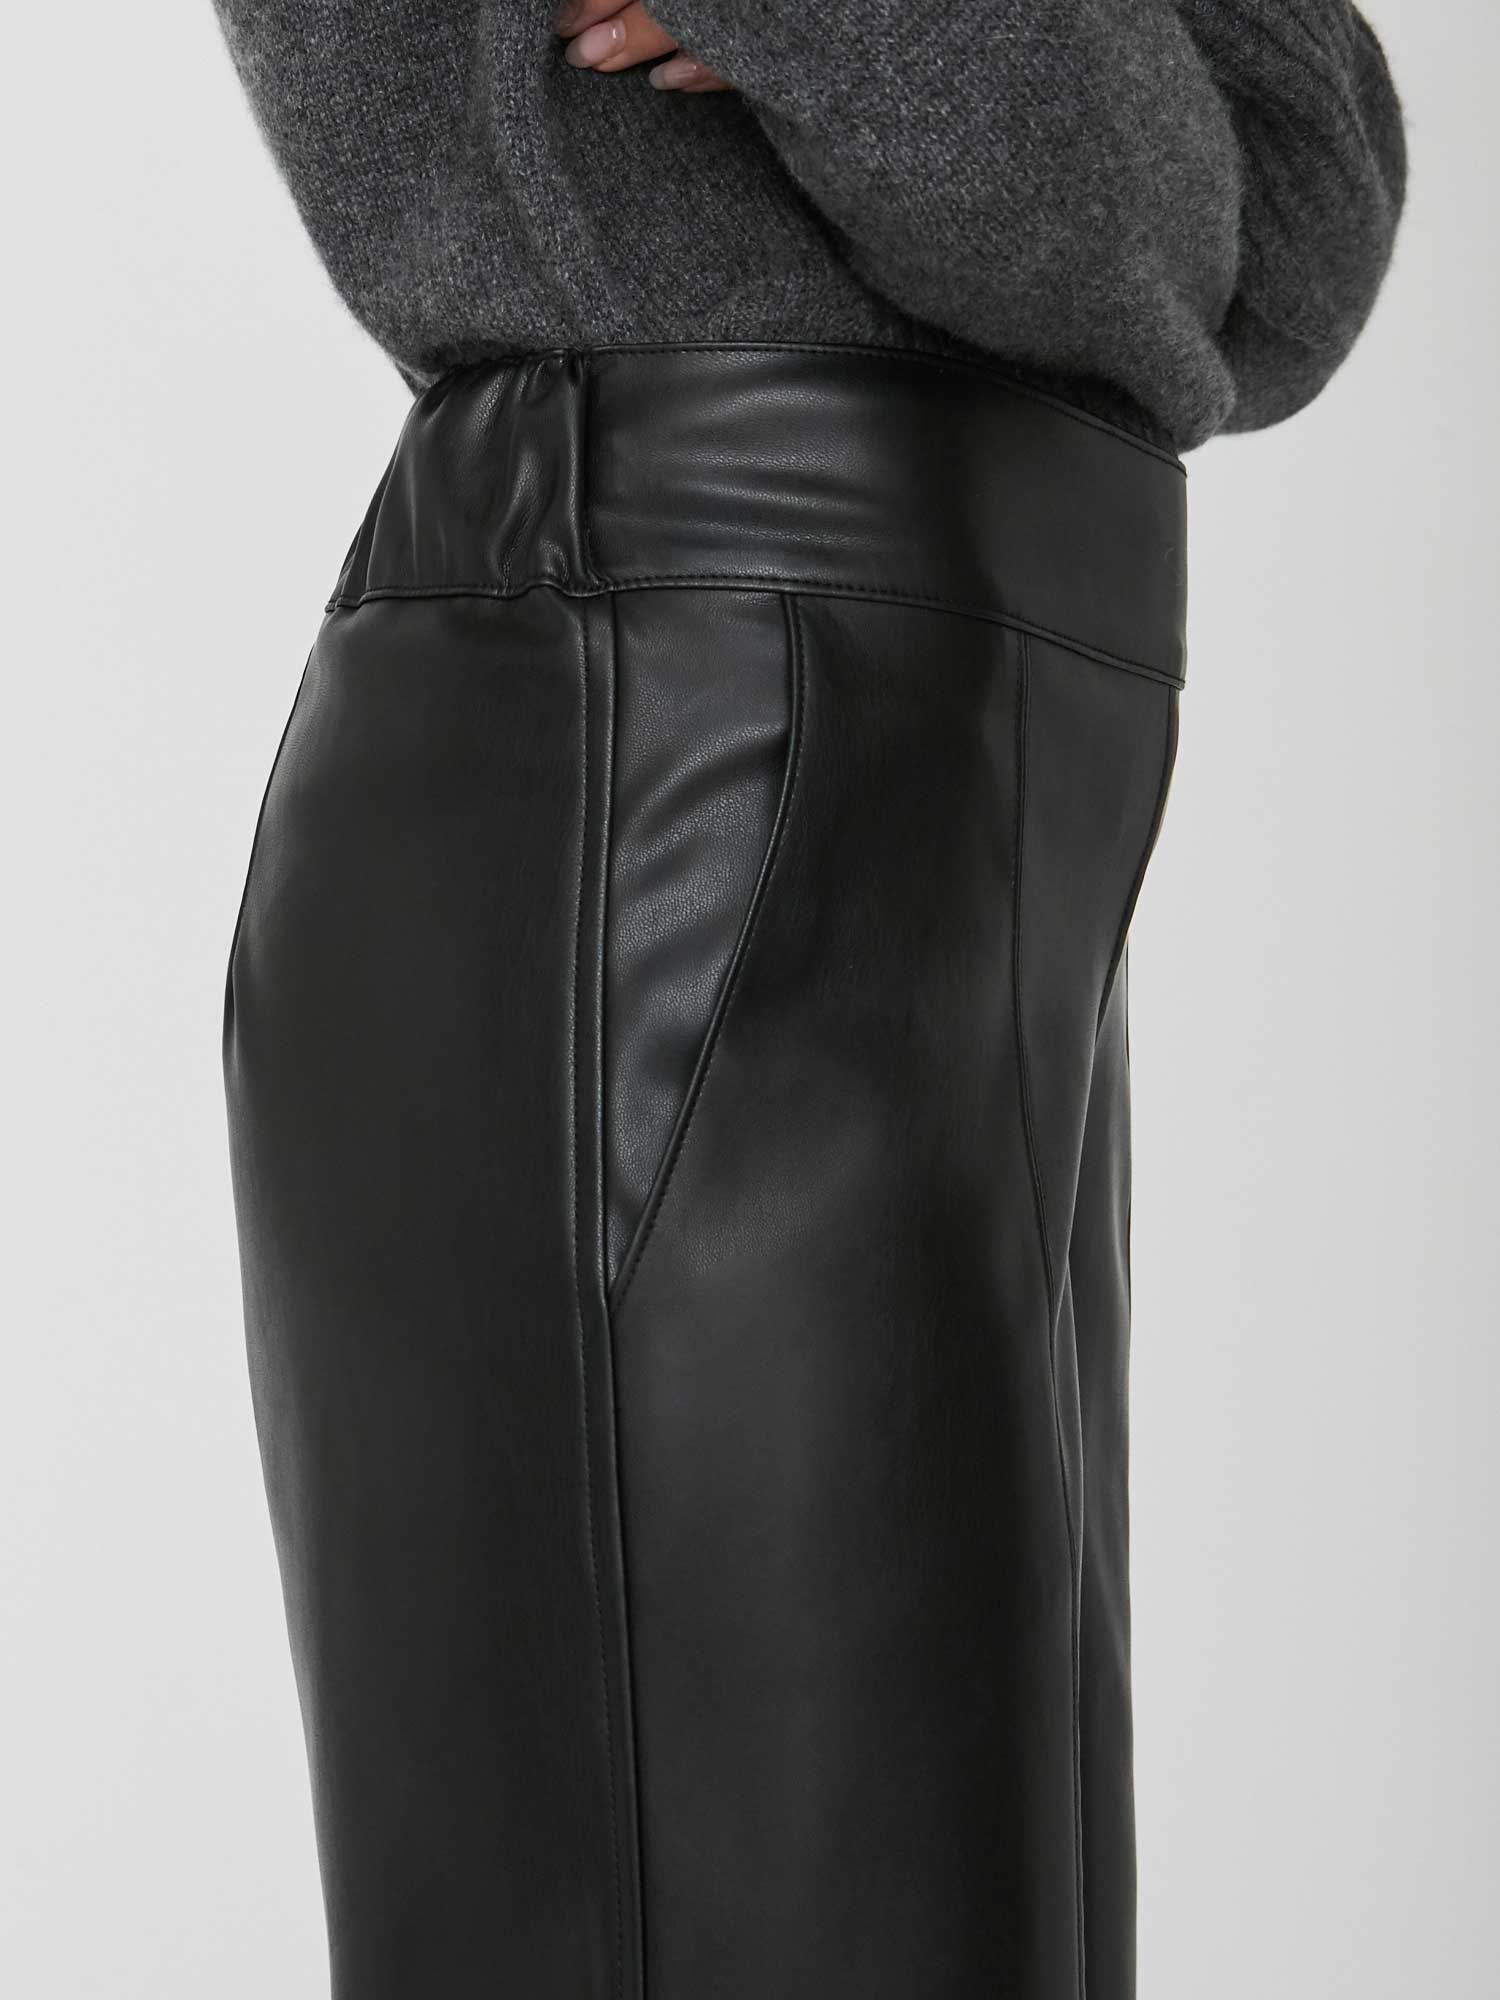 Frida cropped black vegan leather pant close up